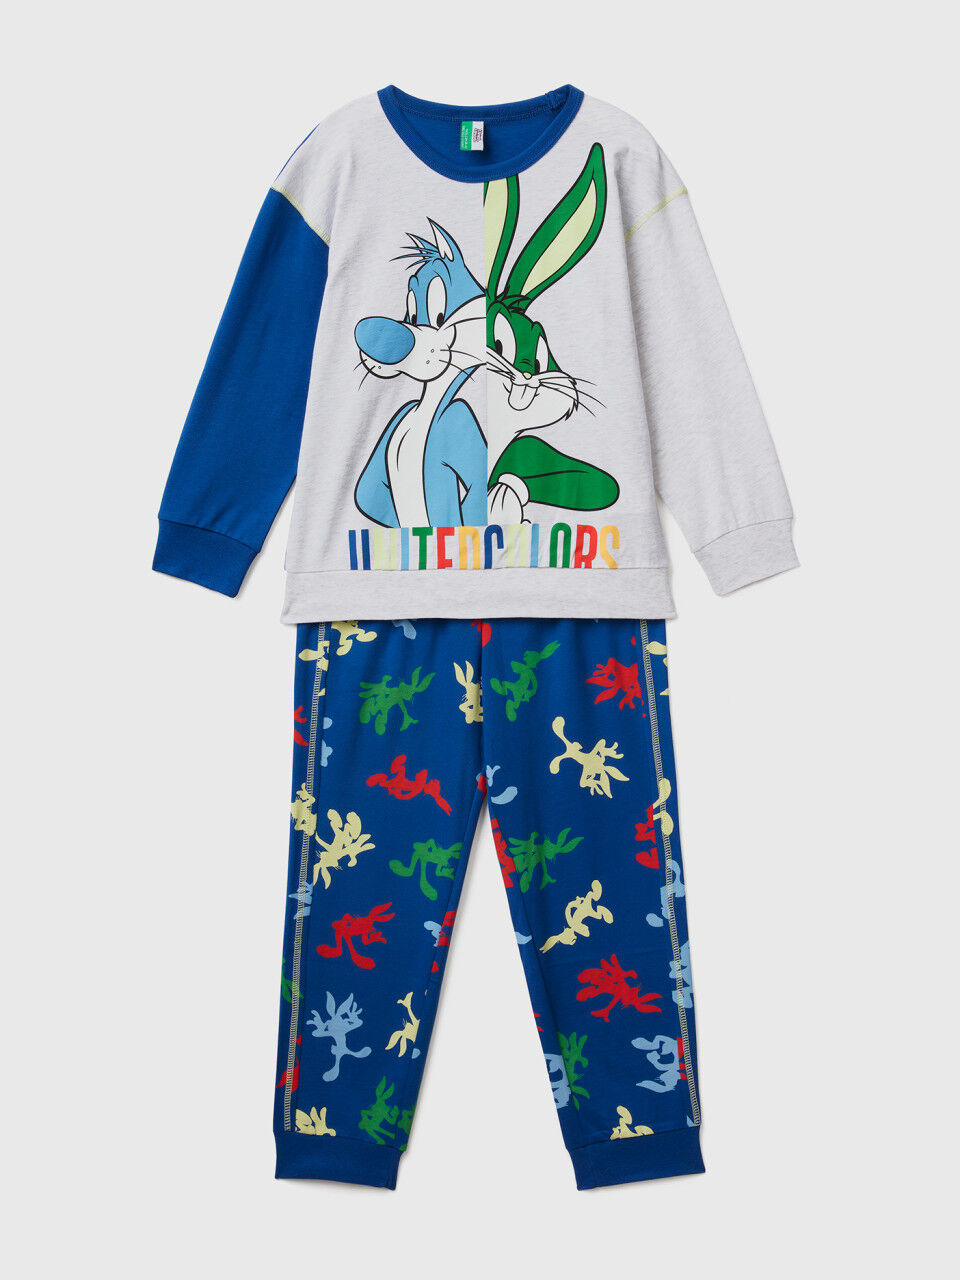 Bugs Bunny & Sylvester pyjamas